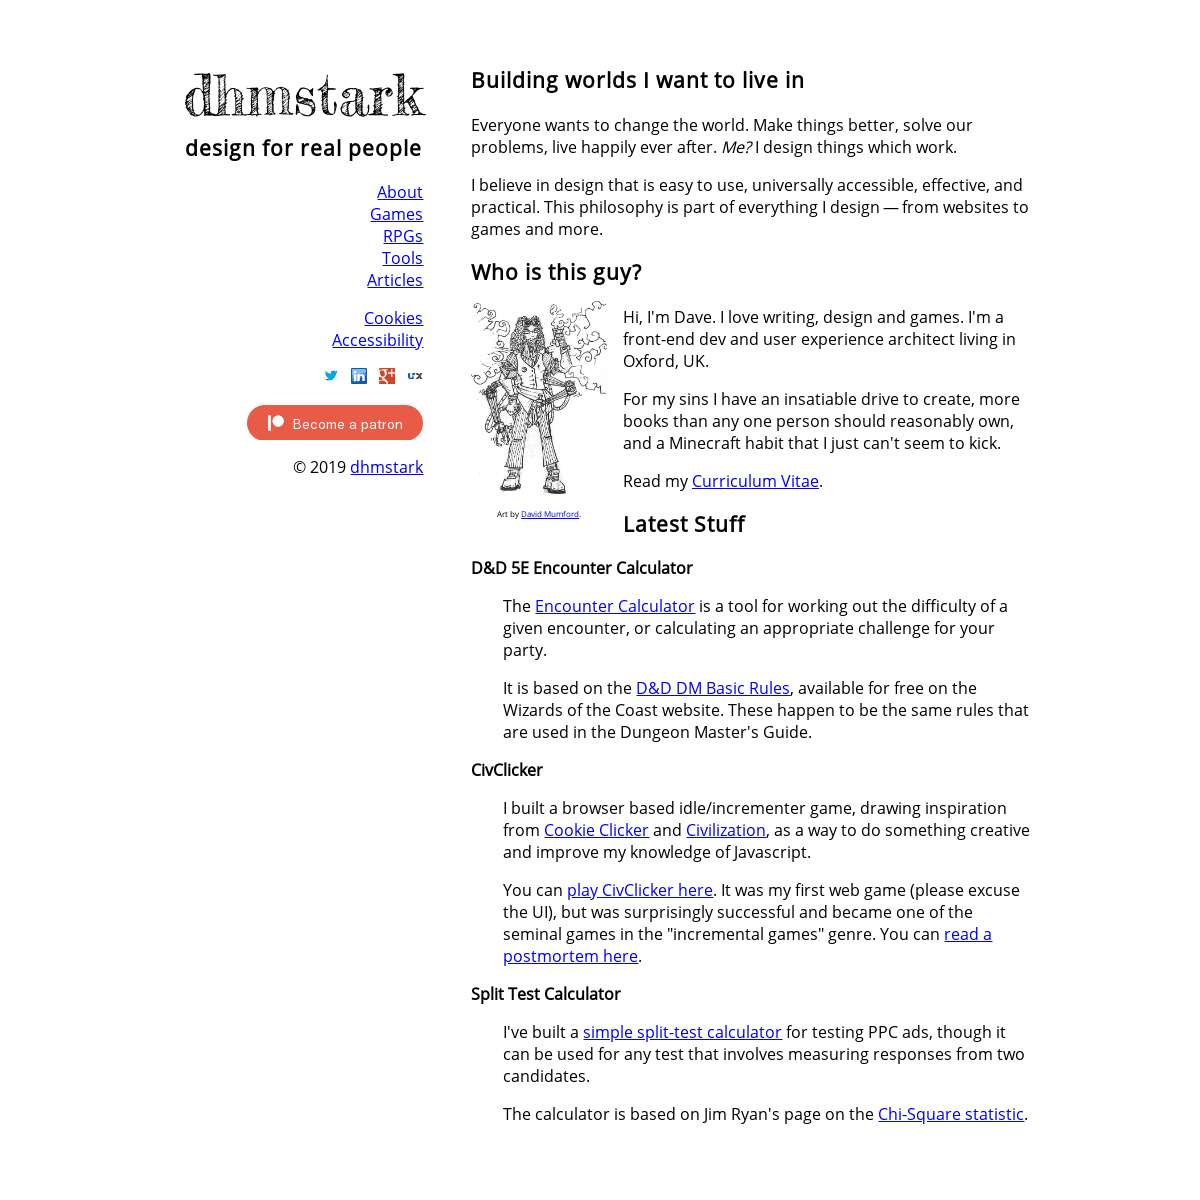 dhmstark - design for real people